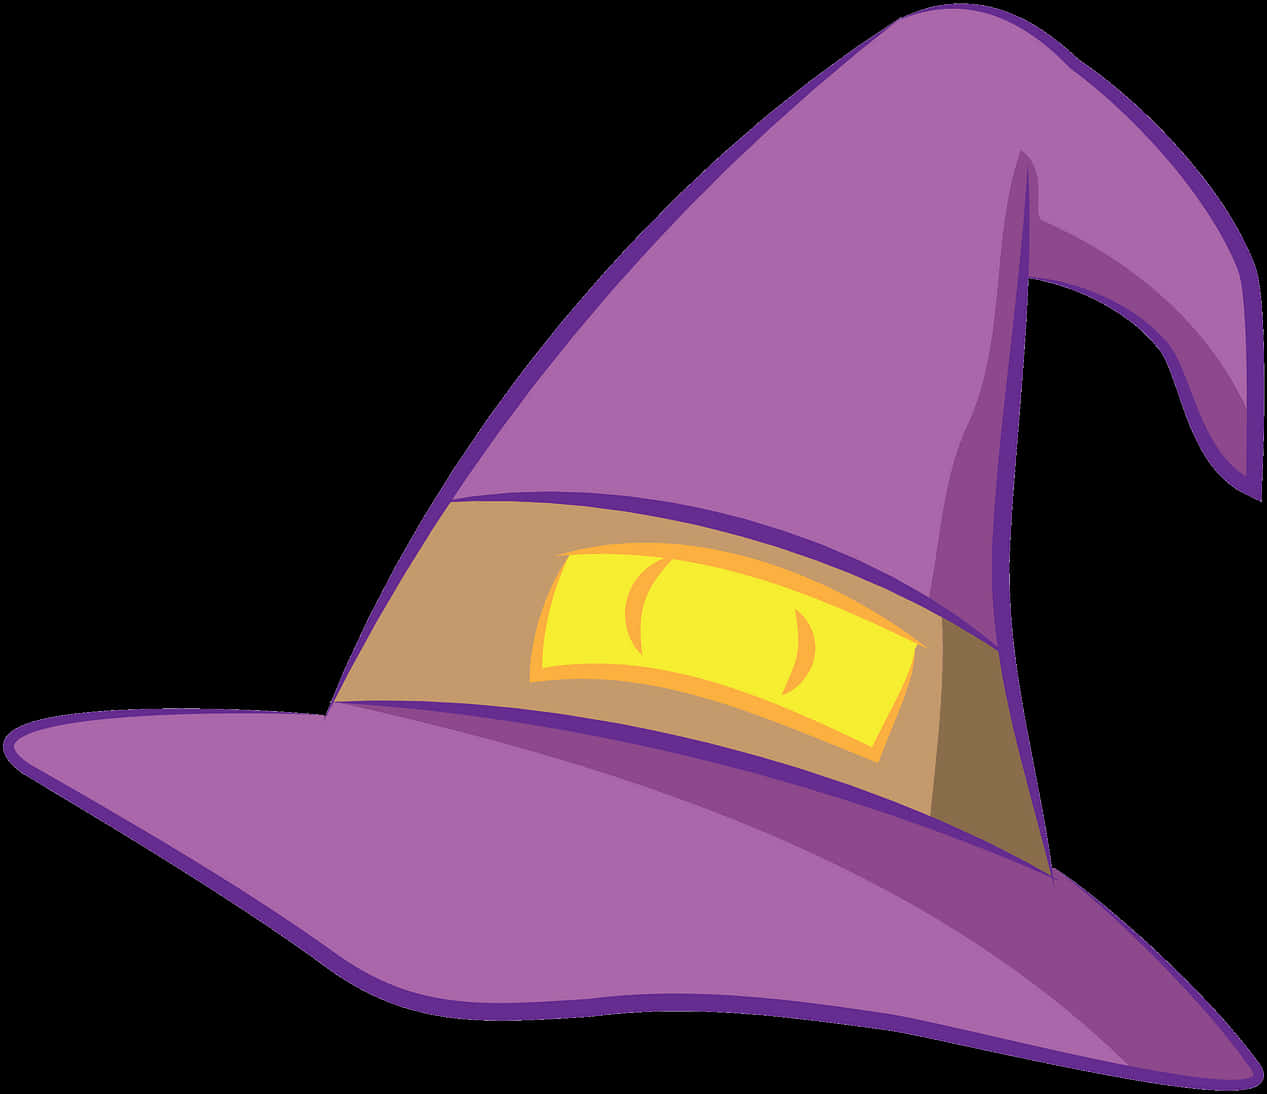 Purple Witch Hat Cartoon